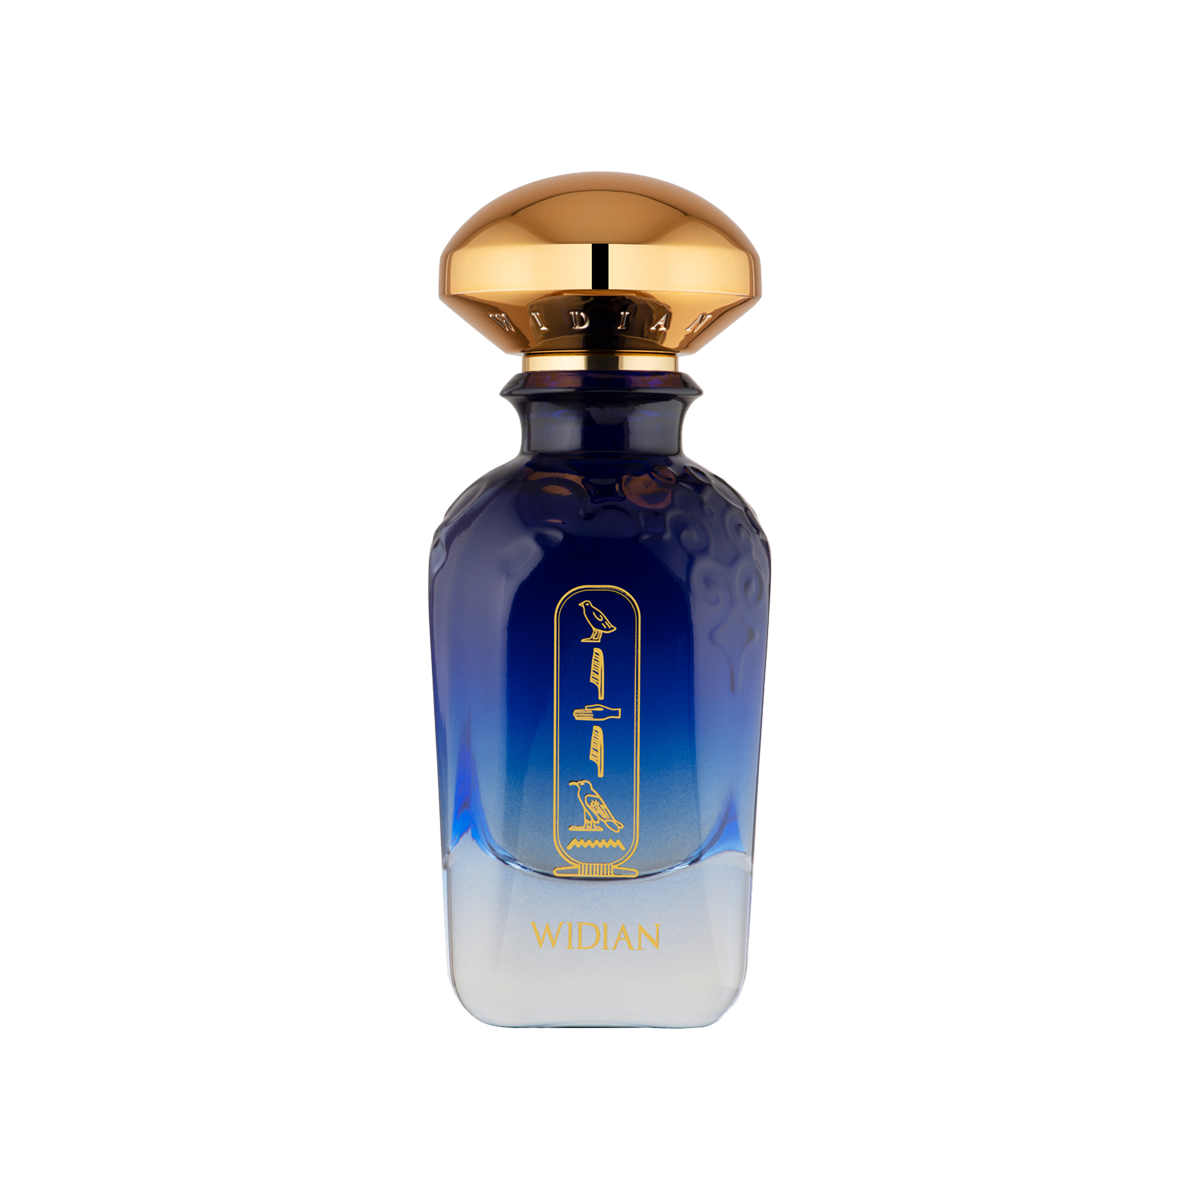 Widian - Aswan Eau de Parfum